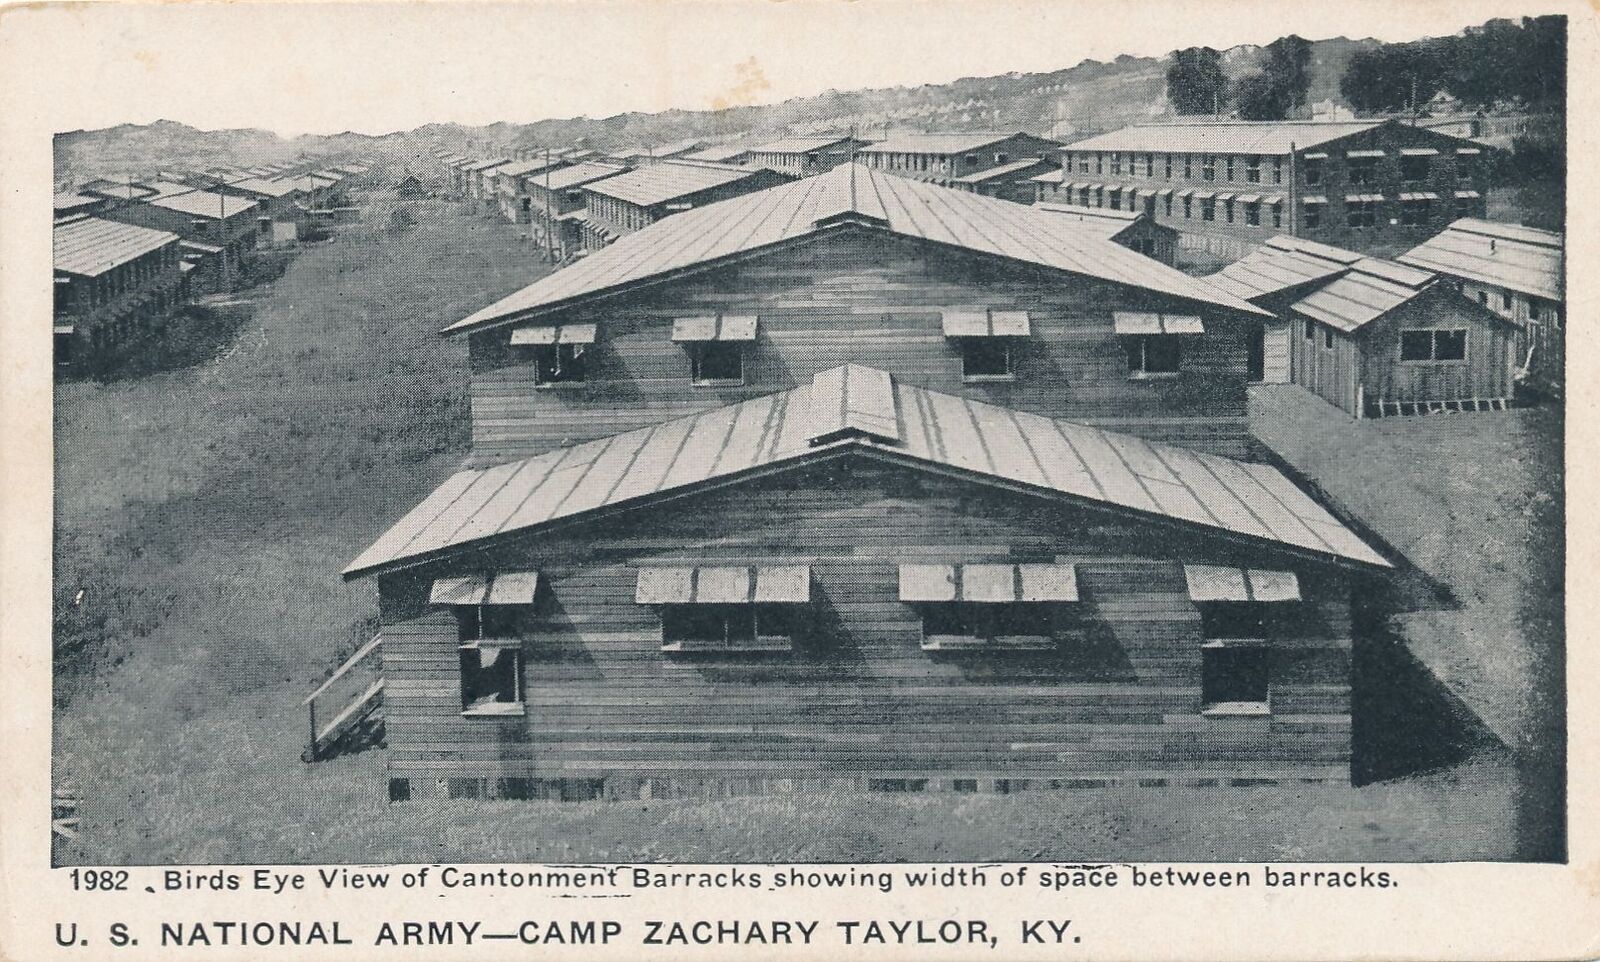 LOUISVILLE KY - Camp Zachary Taylor U.S. National Army Cantonment Barracks